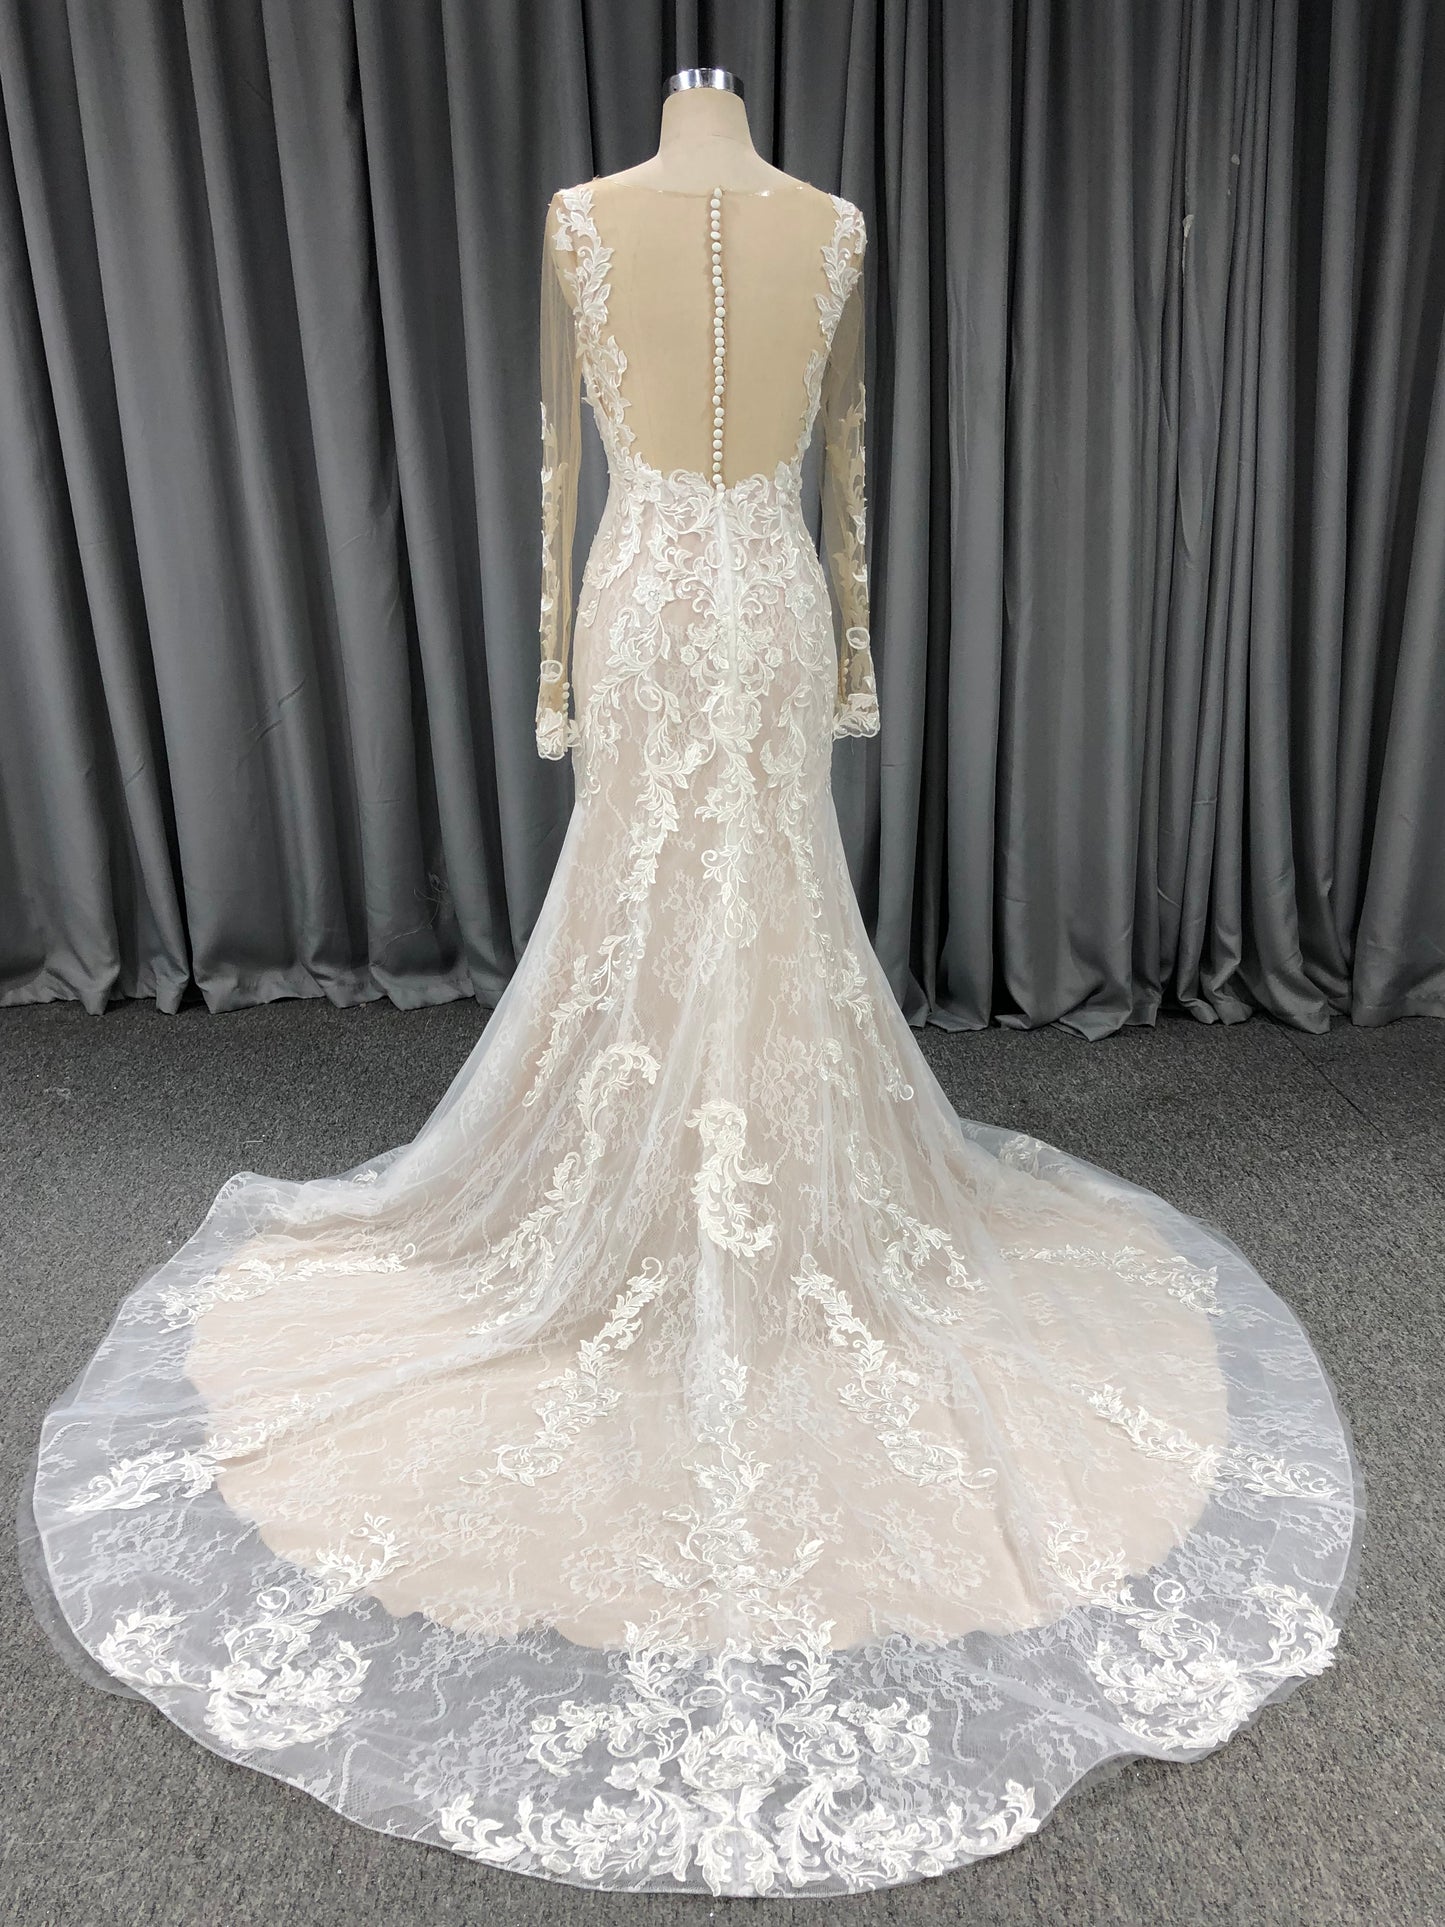 Long sleeves  Lace  Mermaid  Wedding Dress With Train C0019